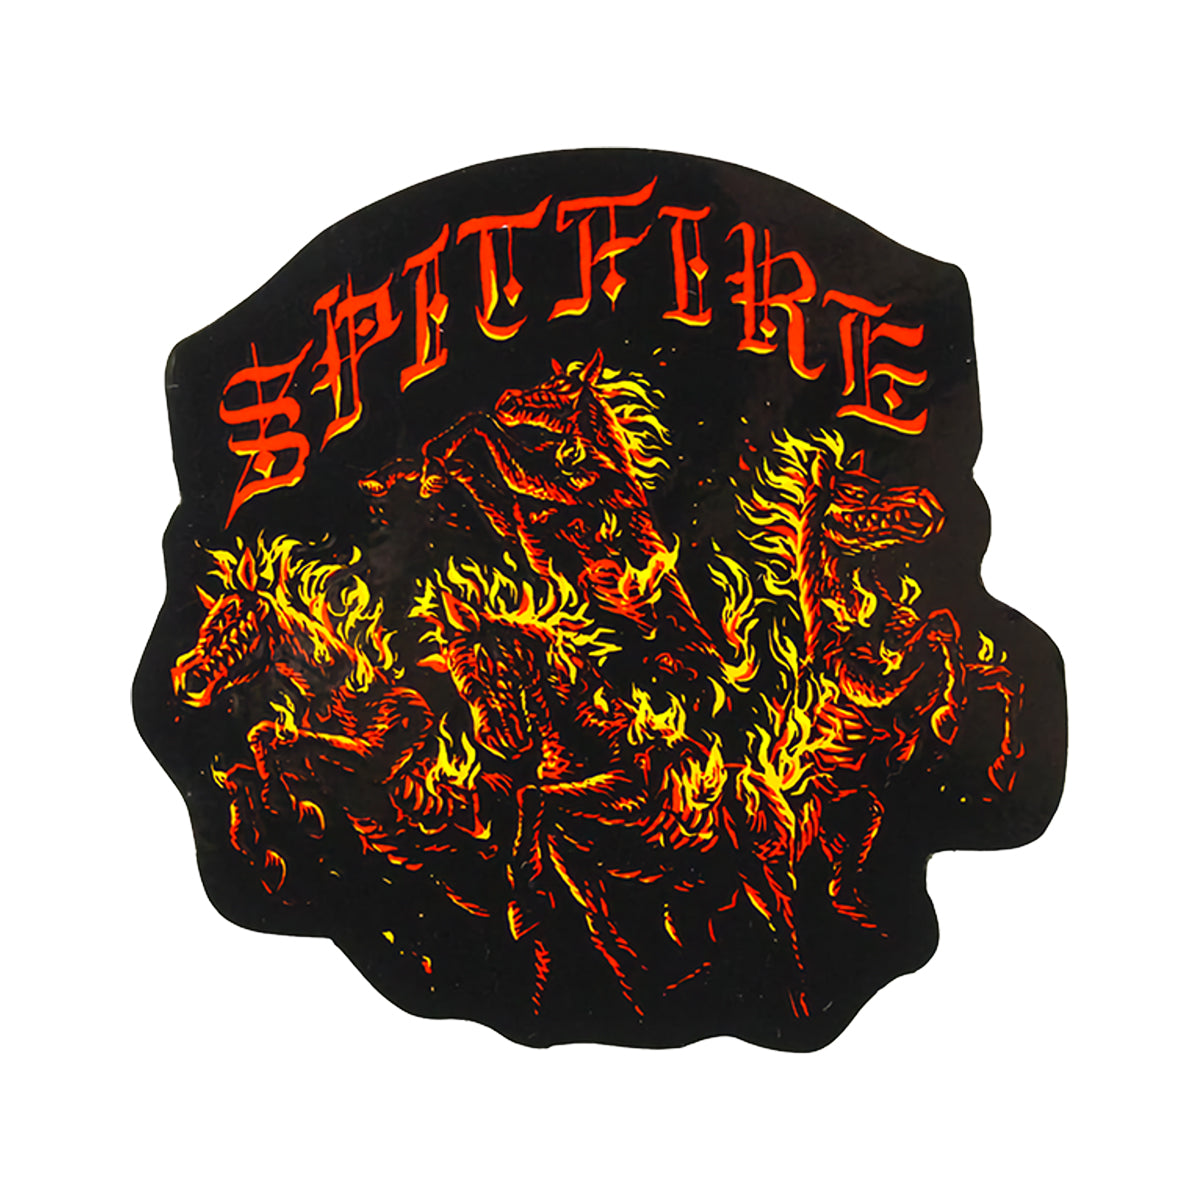 Spitfire Apocalypse 4.75" Sticker